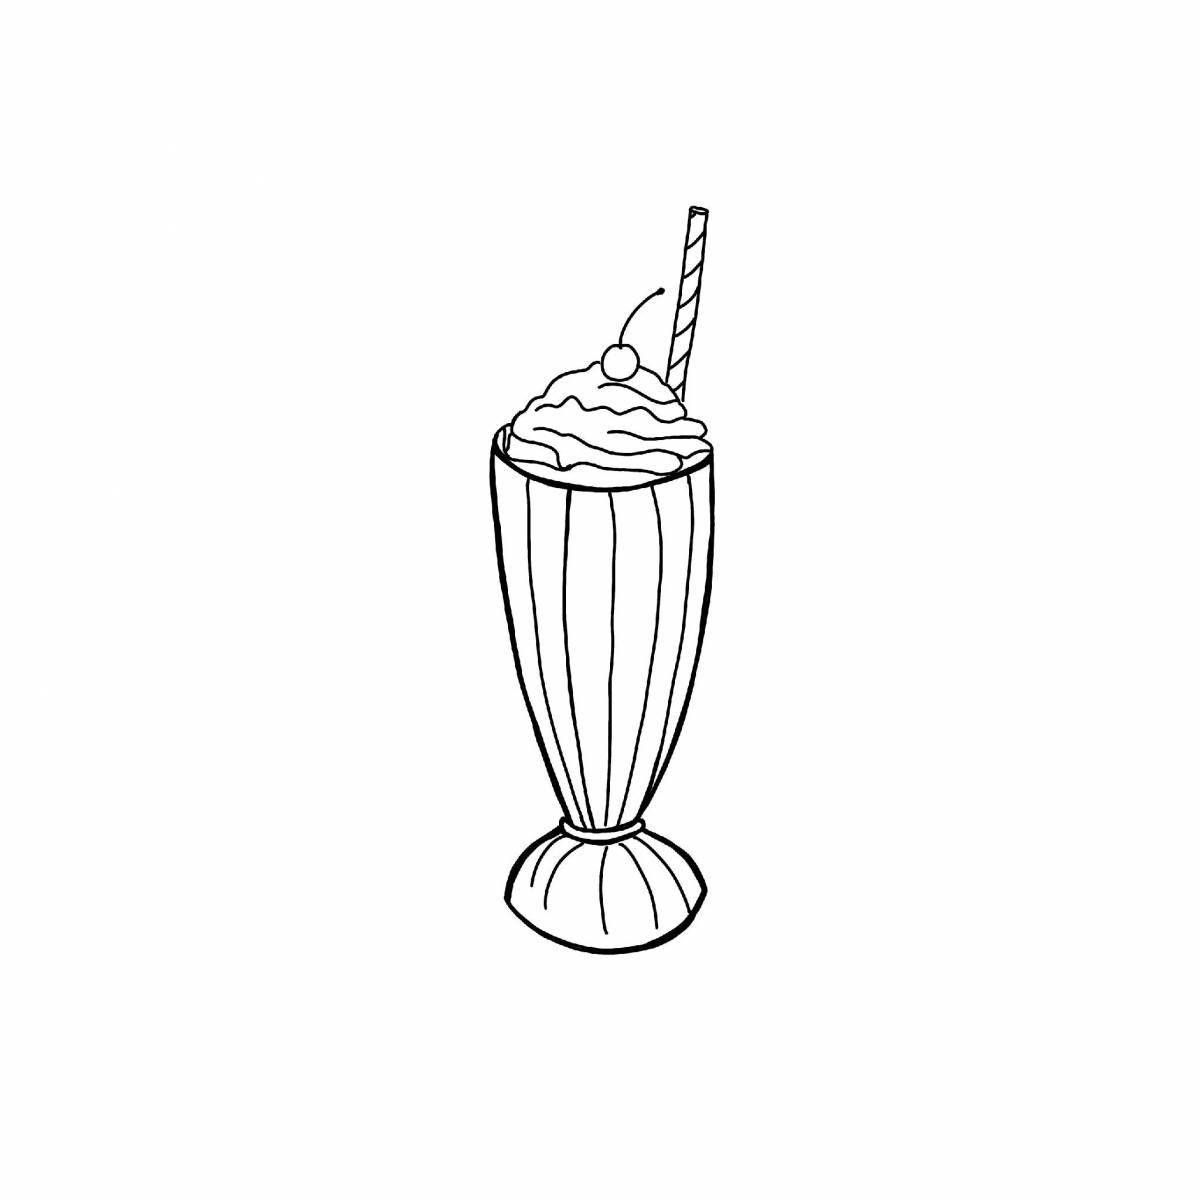 Nutritious milkshake coloring page